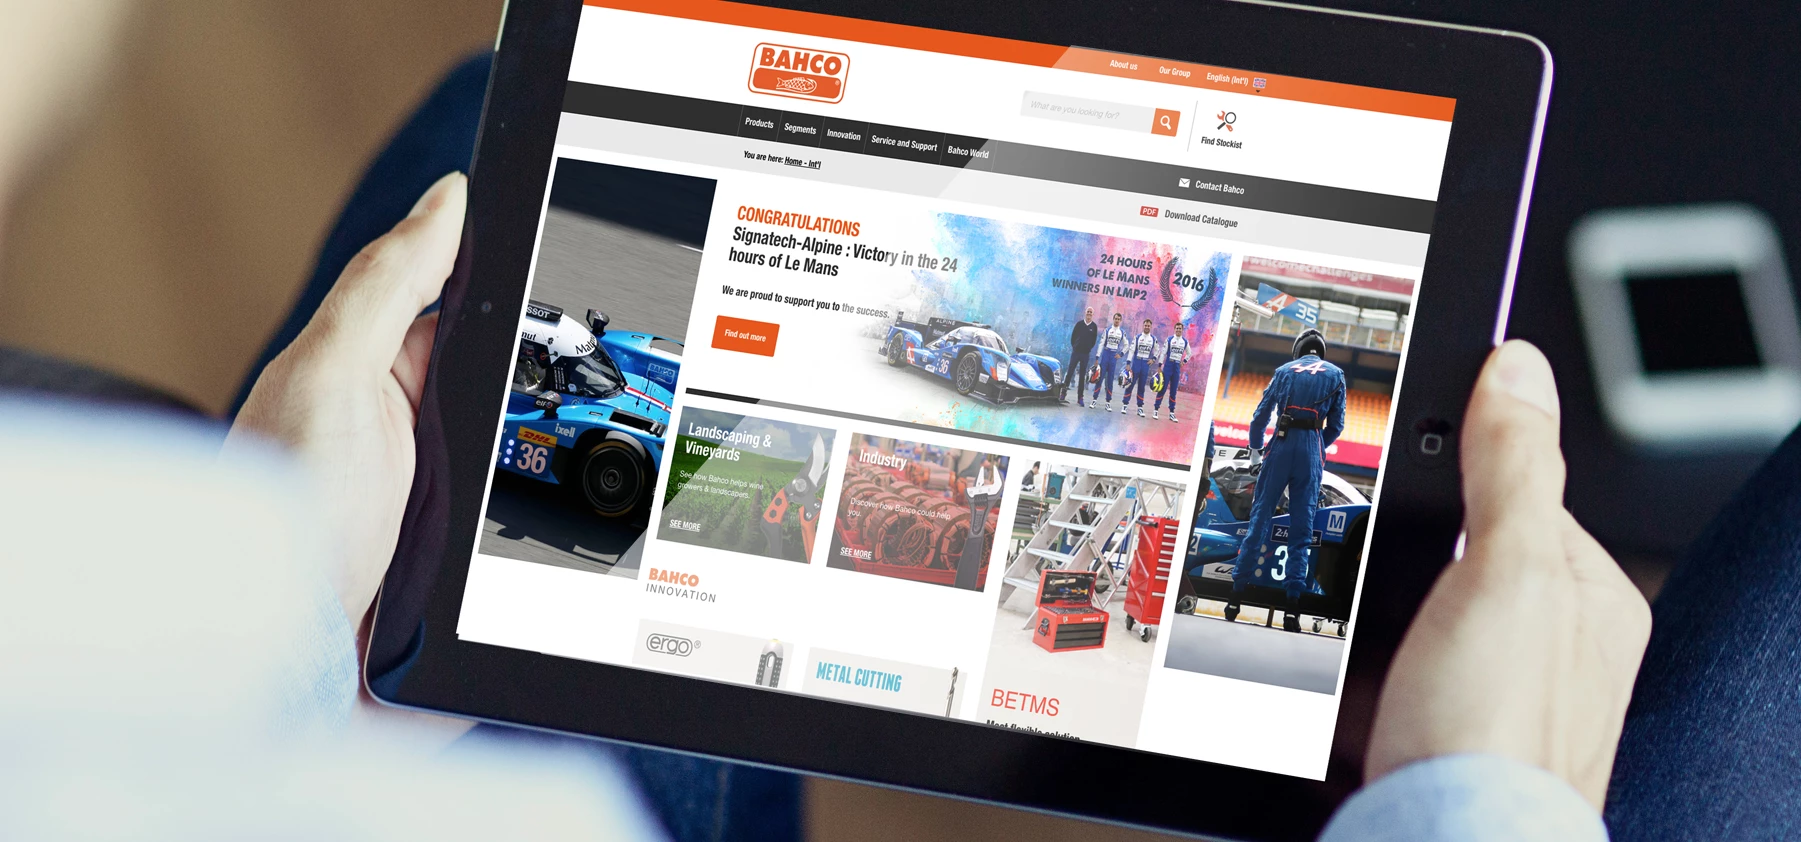 Bahco's new global website designed and built by Venn Digital